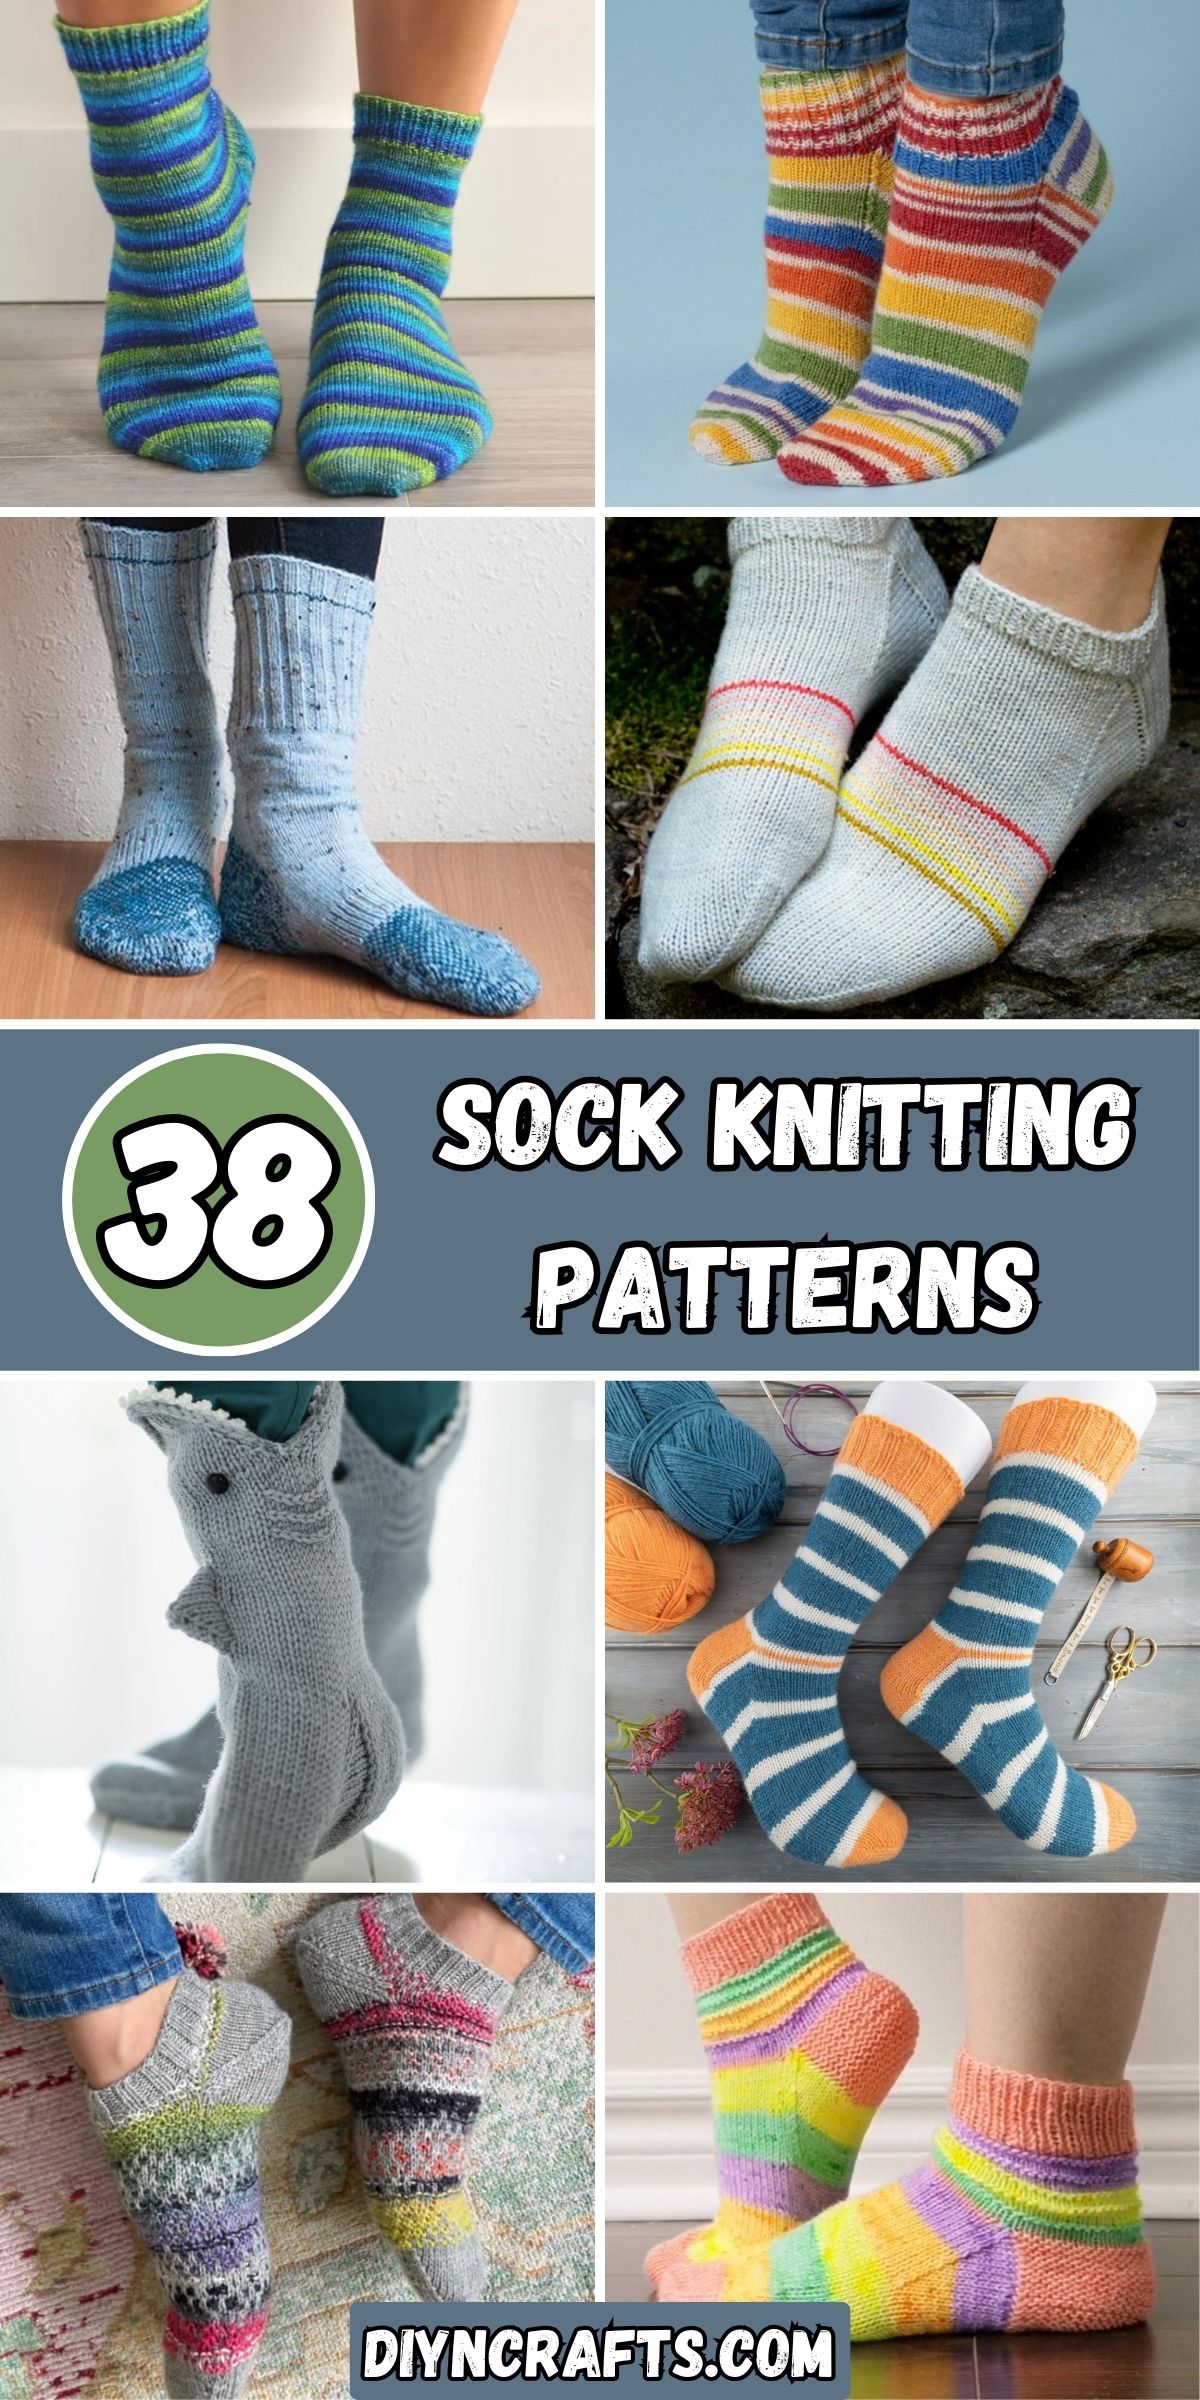 38 Sock Knitting Patterns collage.